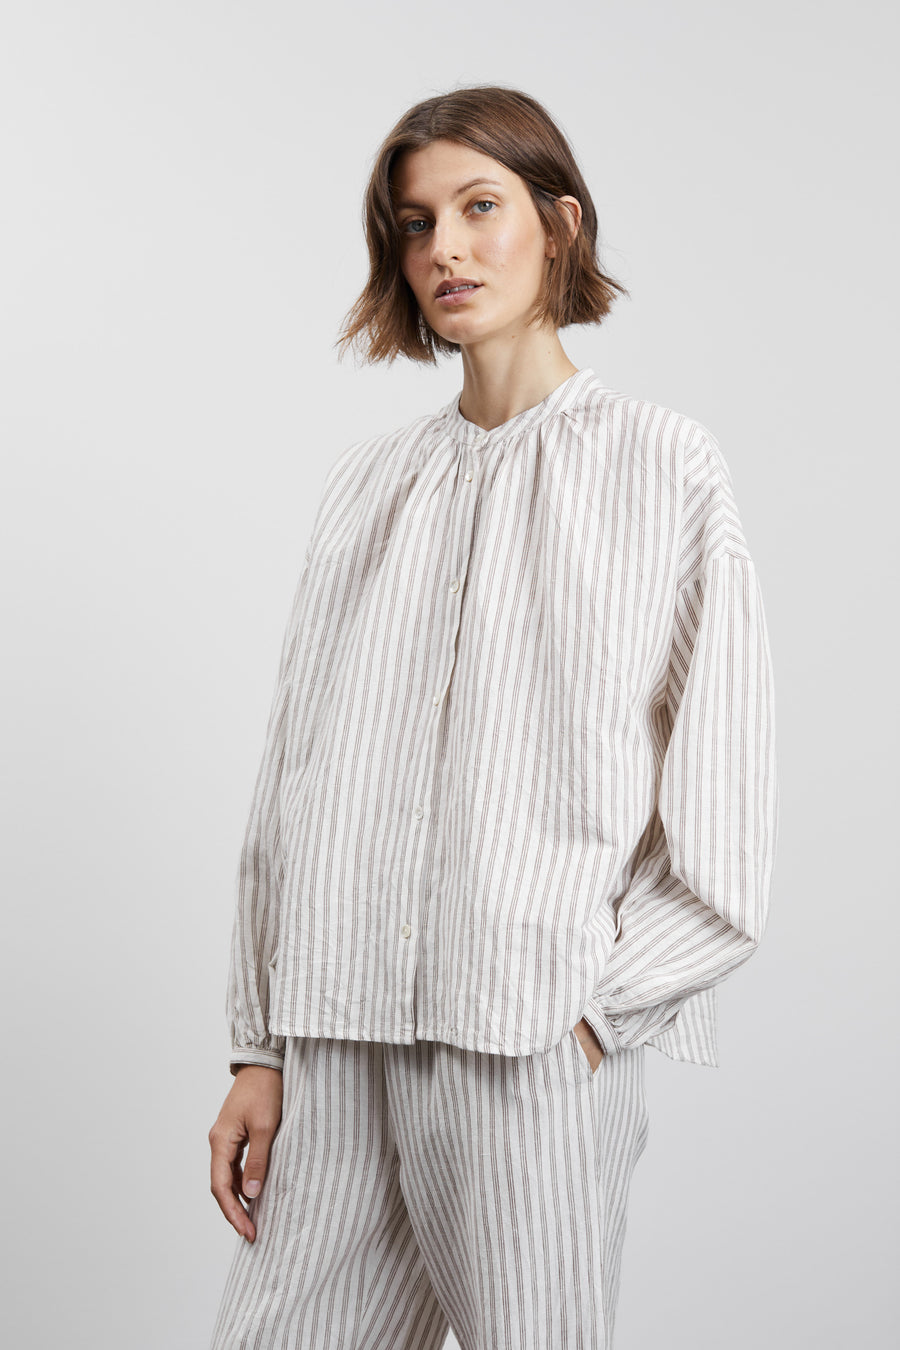 Cilla Shirt -Brown/Off white Stripe